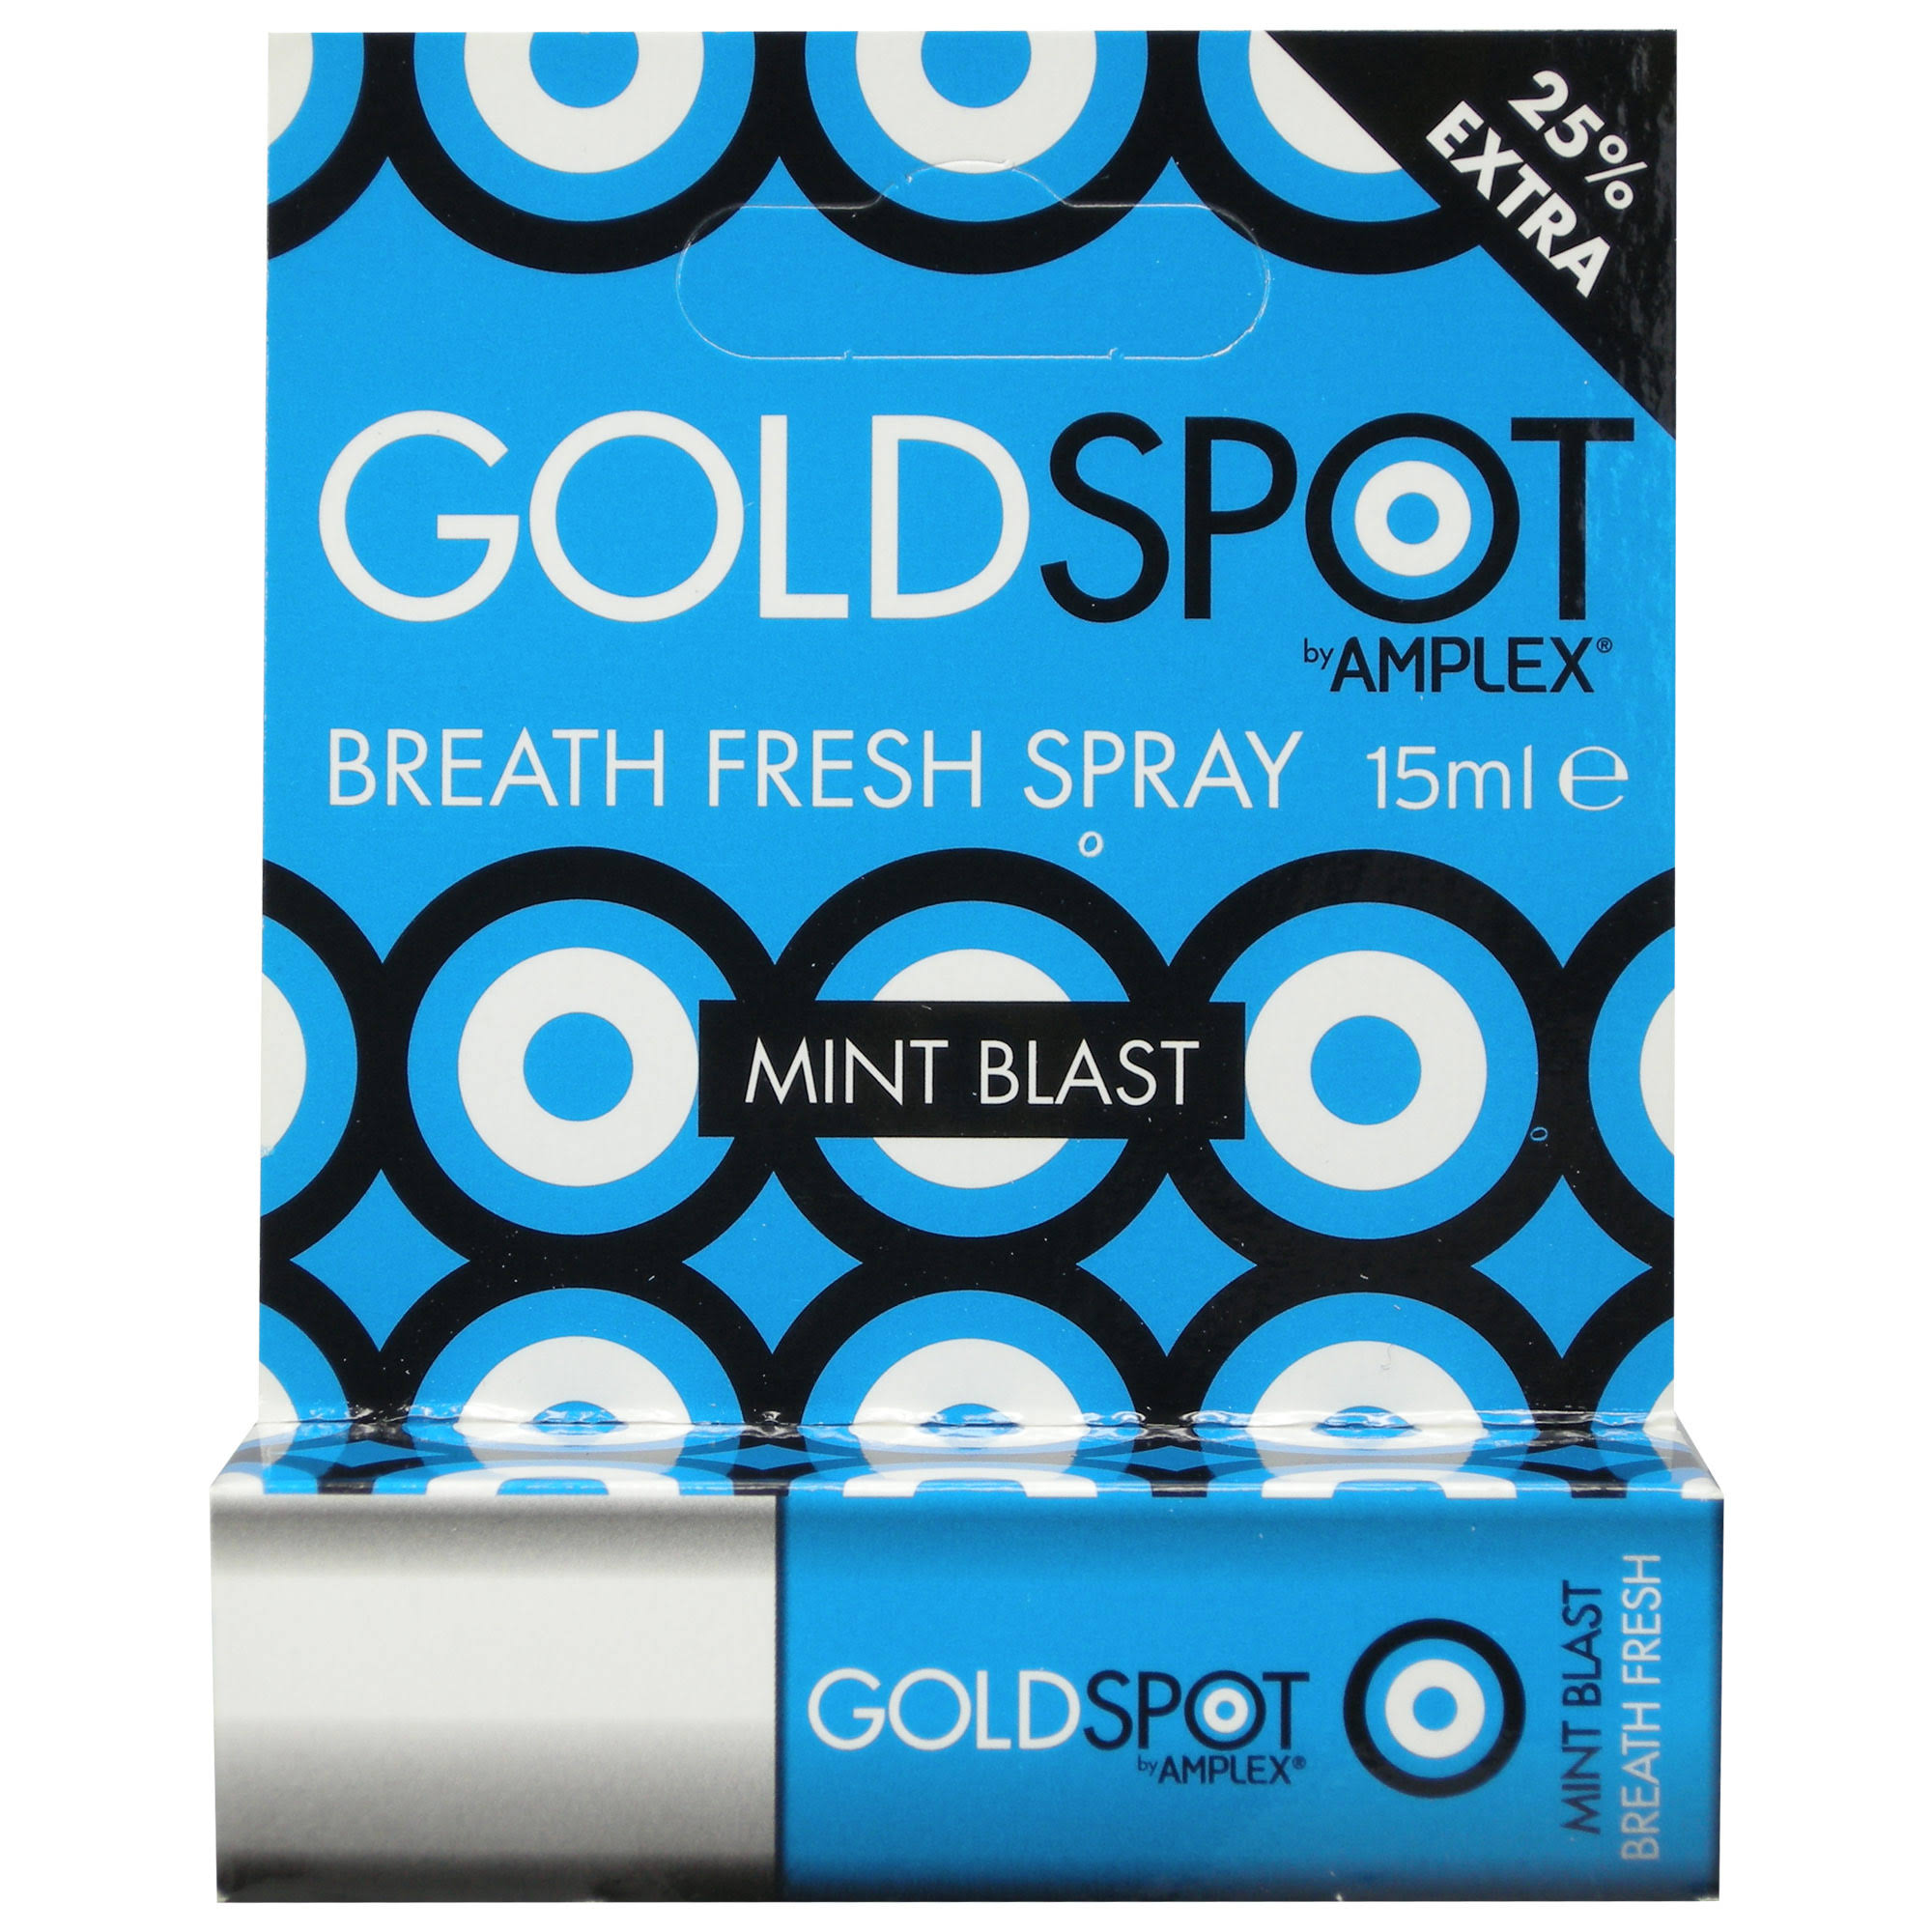 Gold Spot Breath Fresh Spray - Mint Blast, 15ml